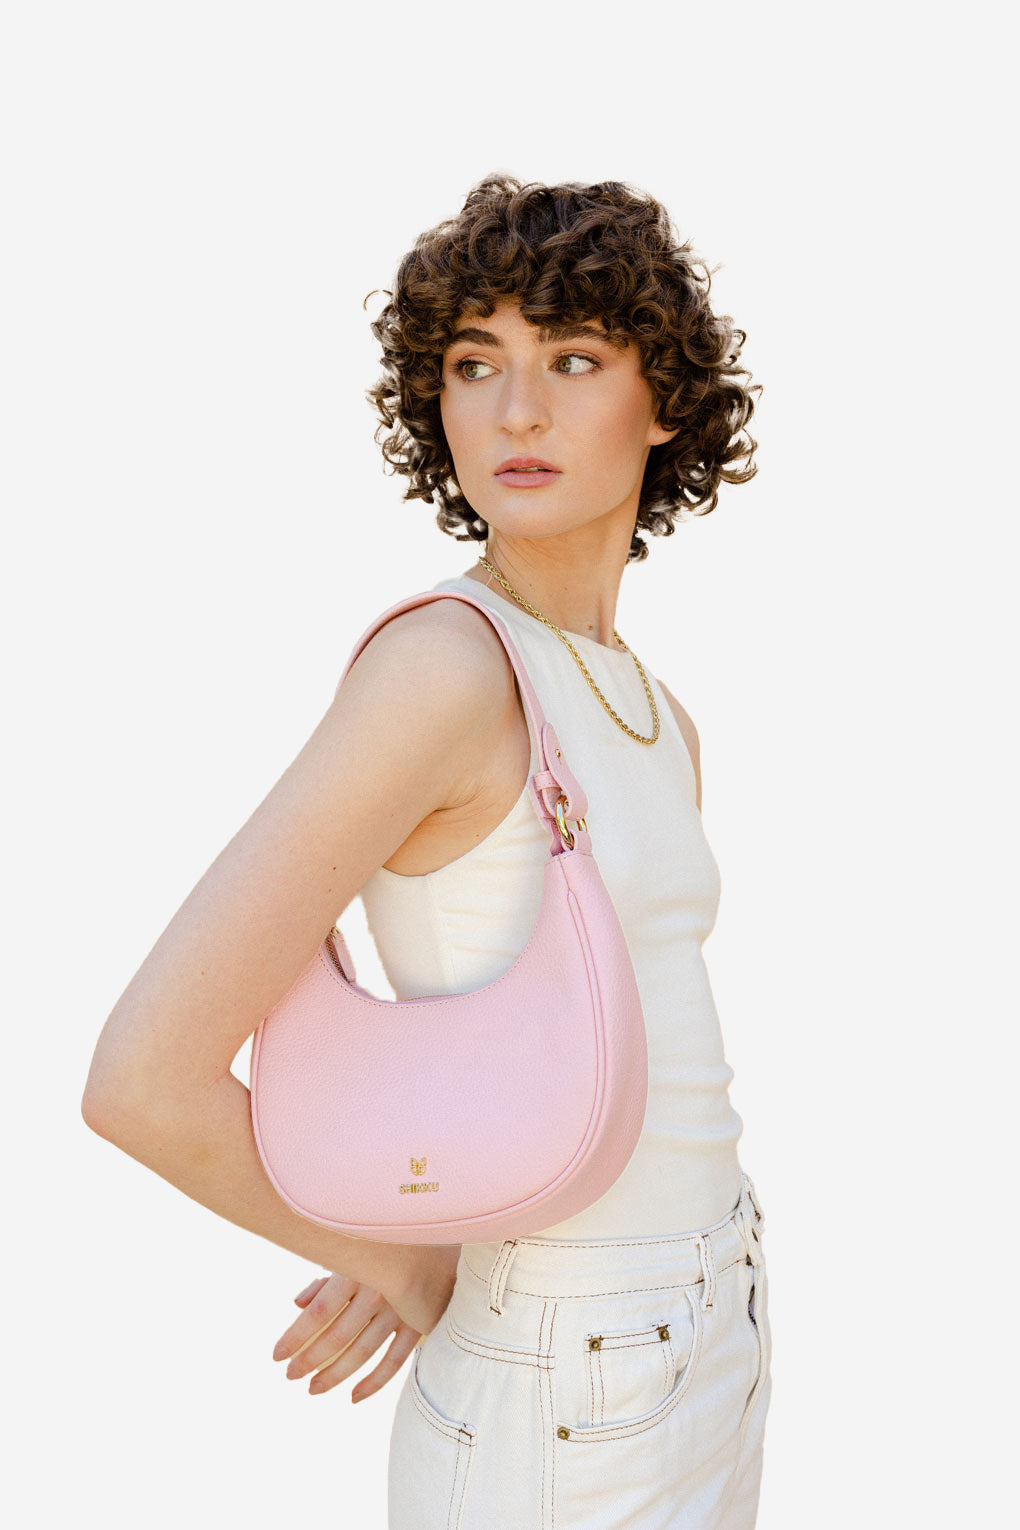 Hobo Leather Bag - Pink